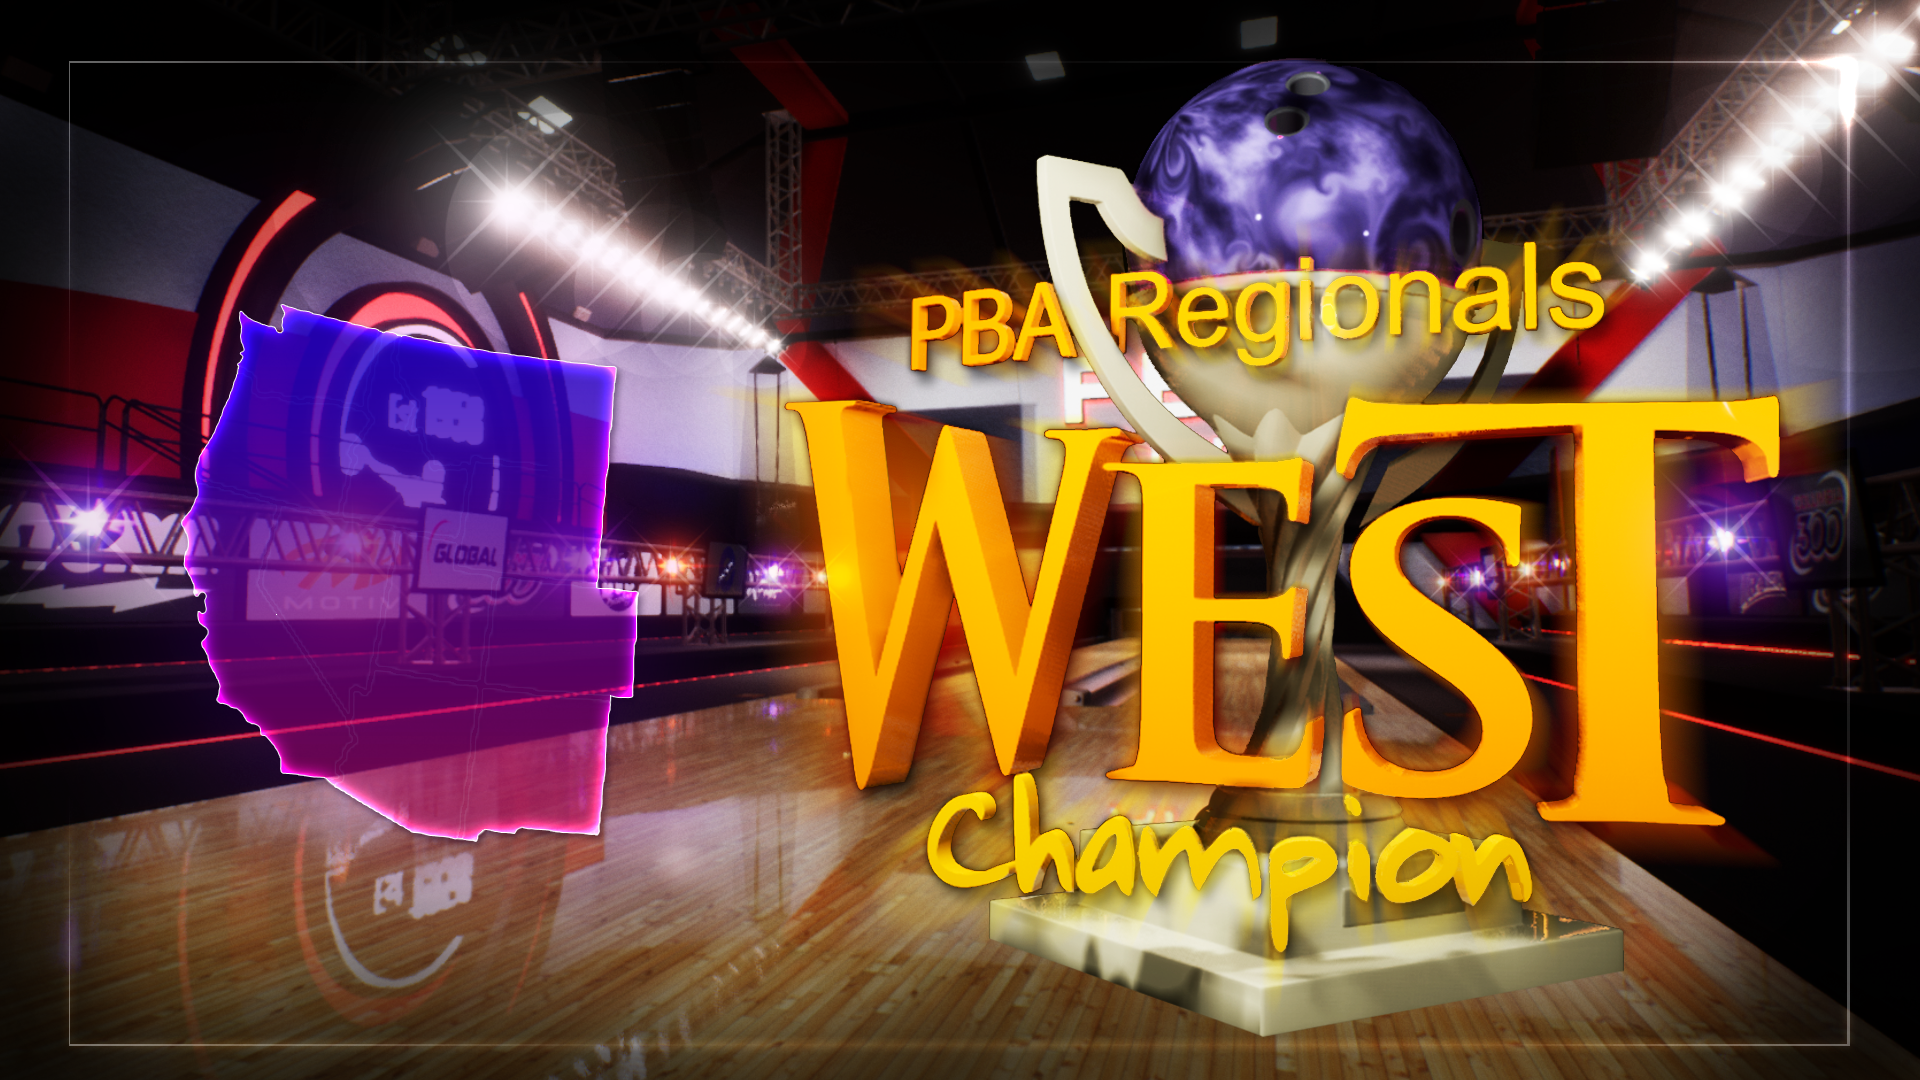 Icon for PBA Regionals West Champion